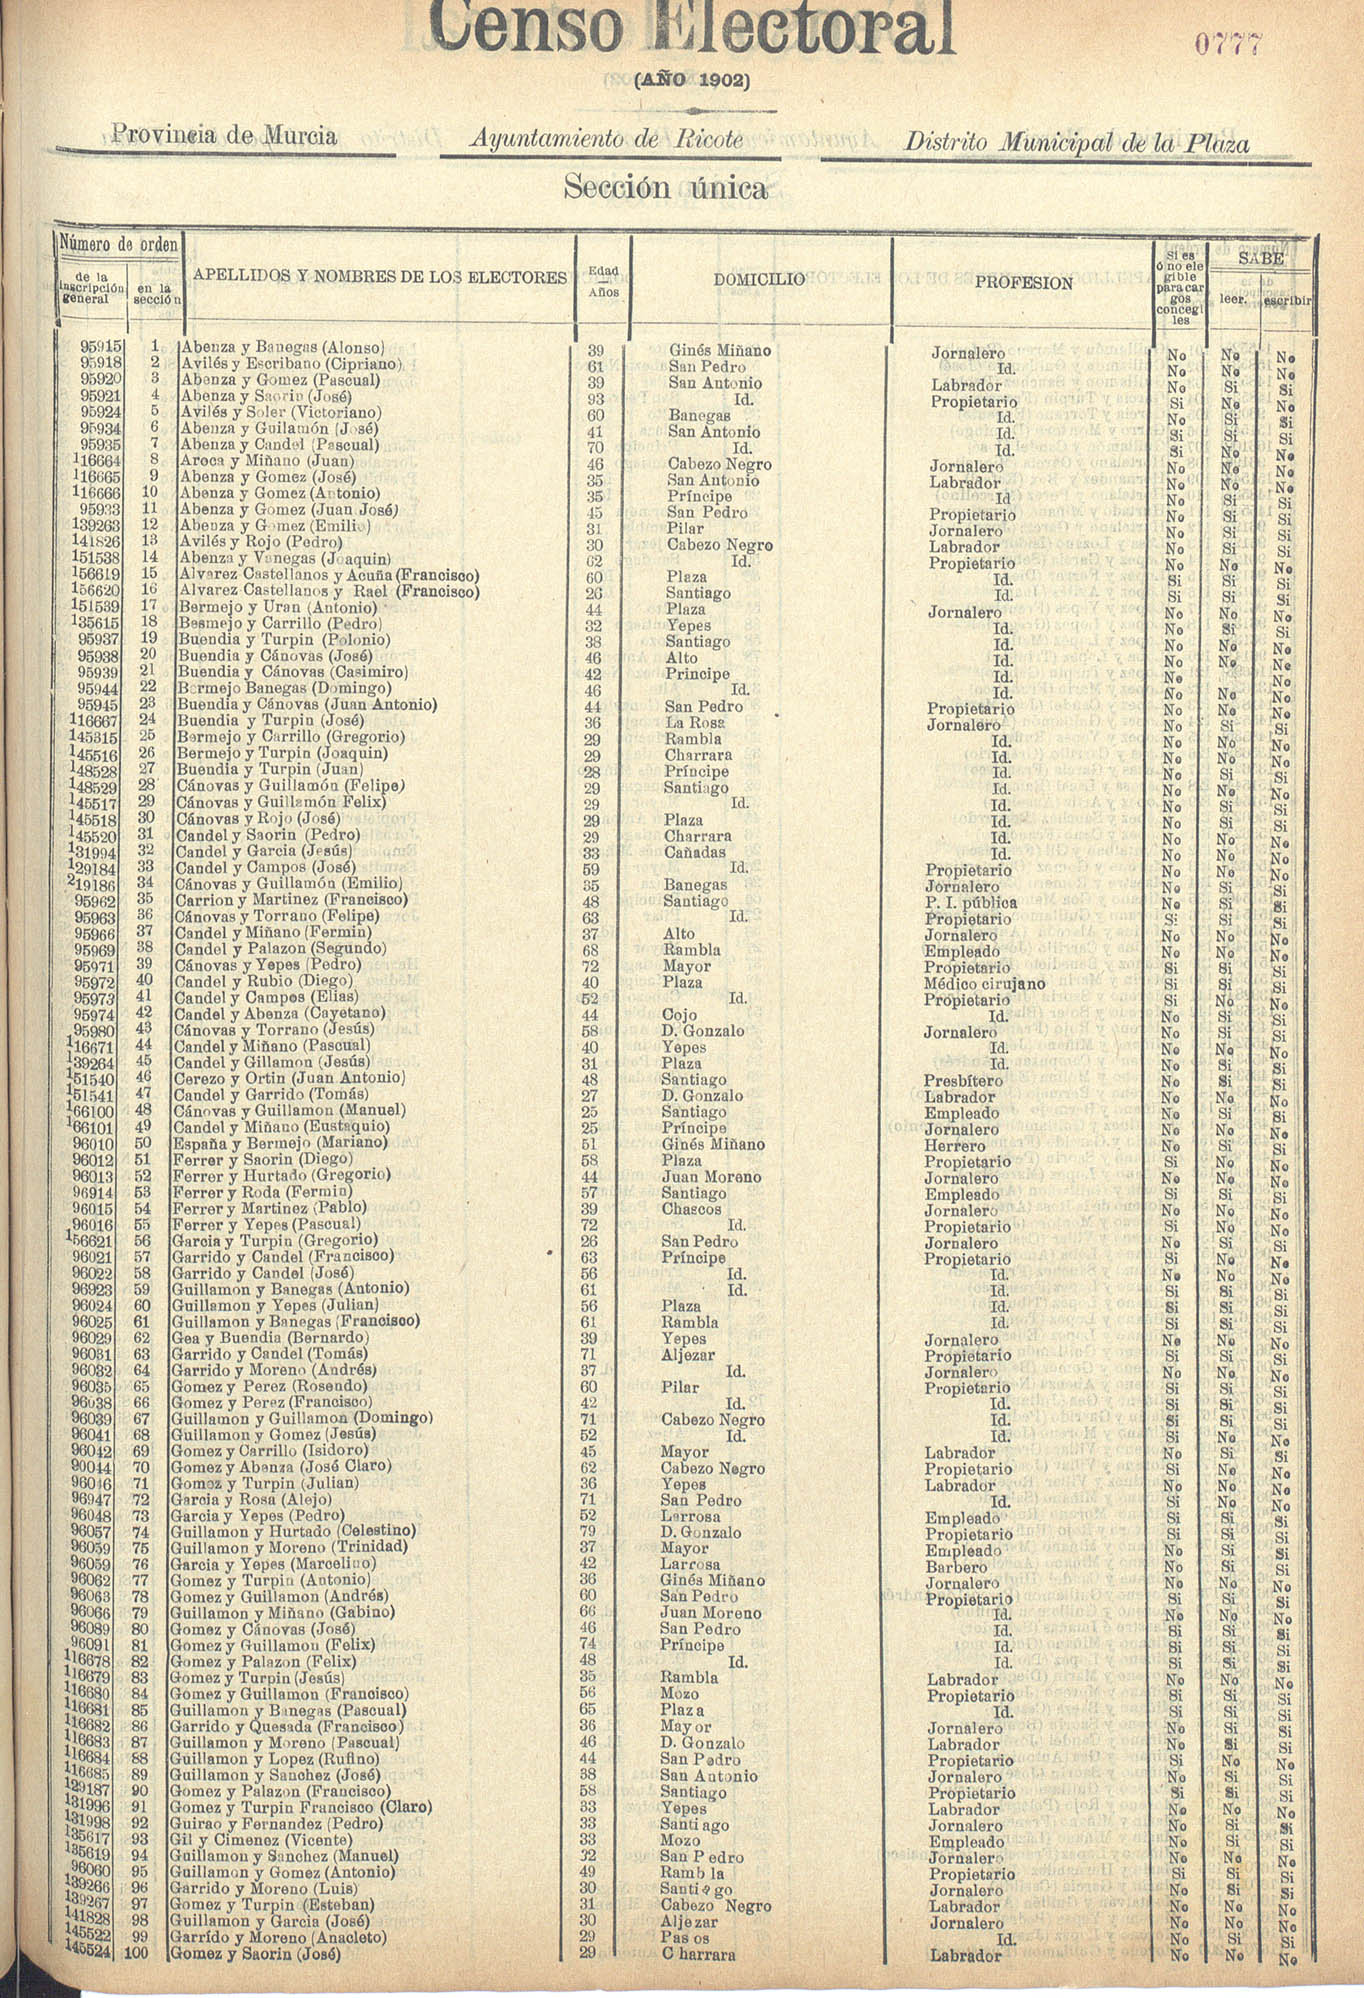 Censo electoral provincial de 1902: Ricote.